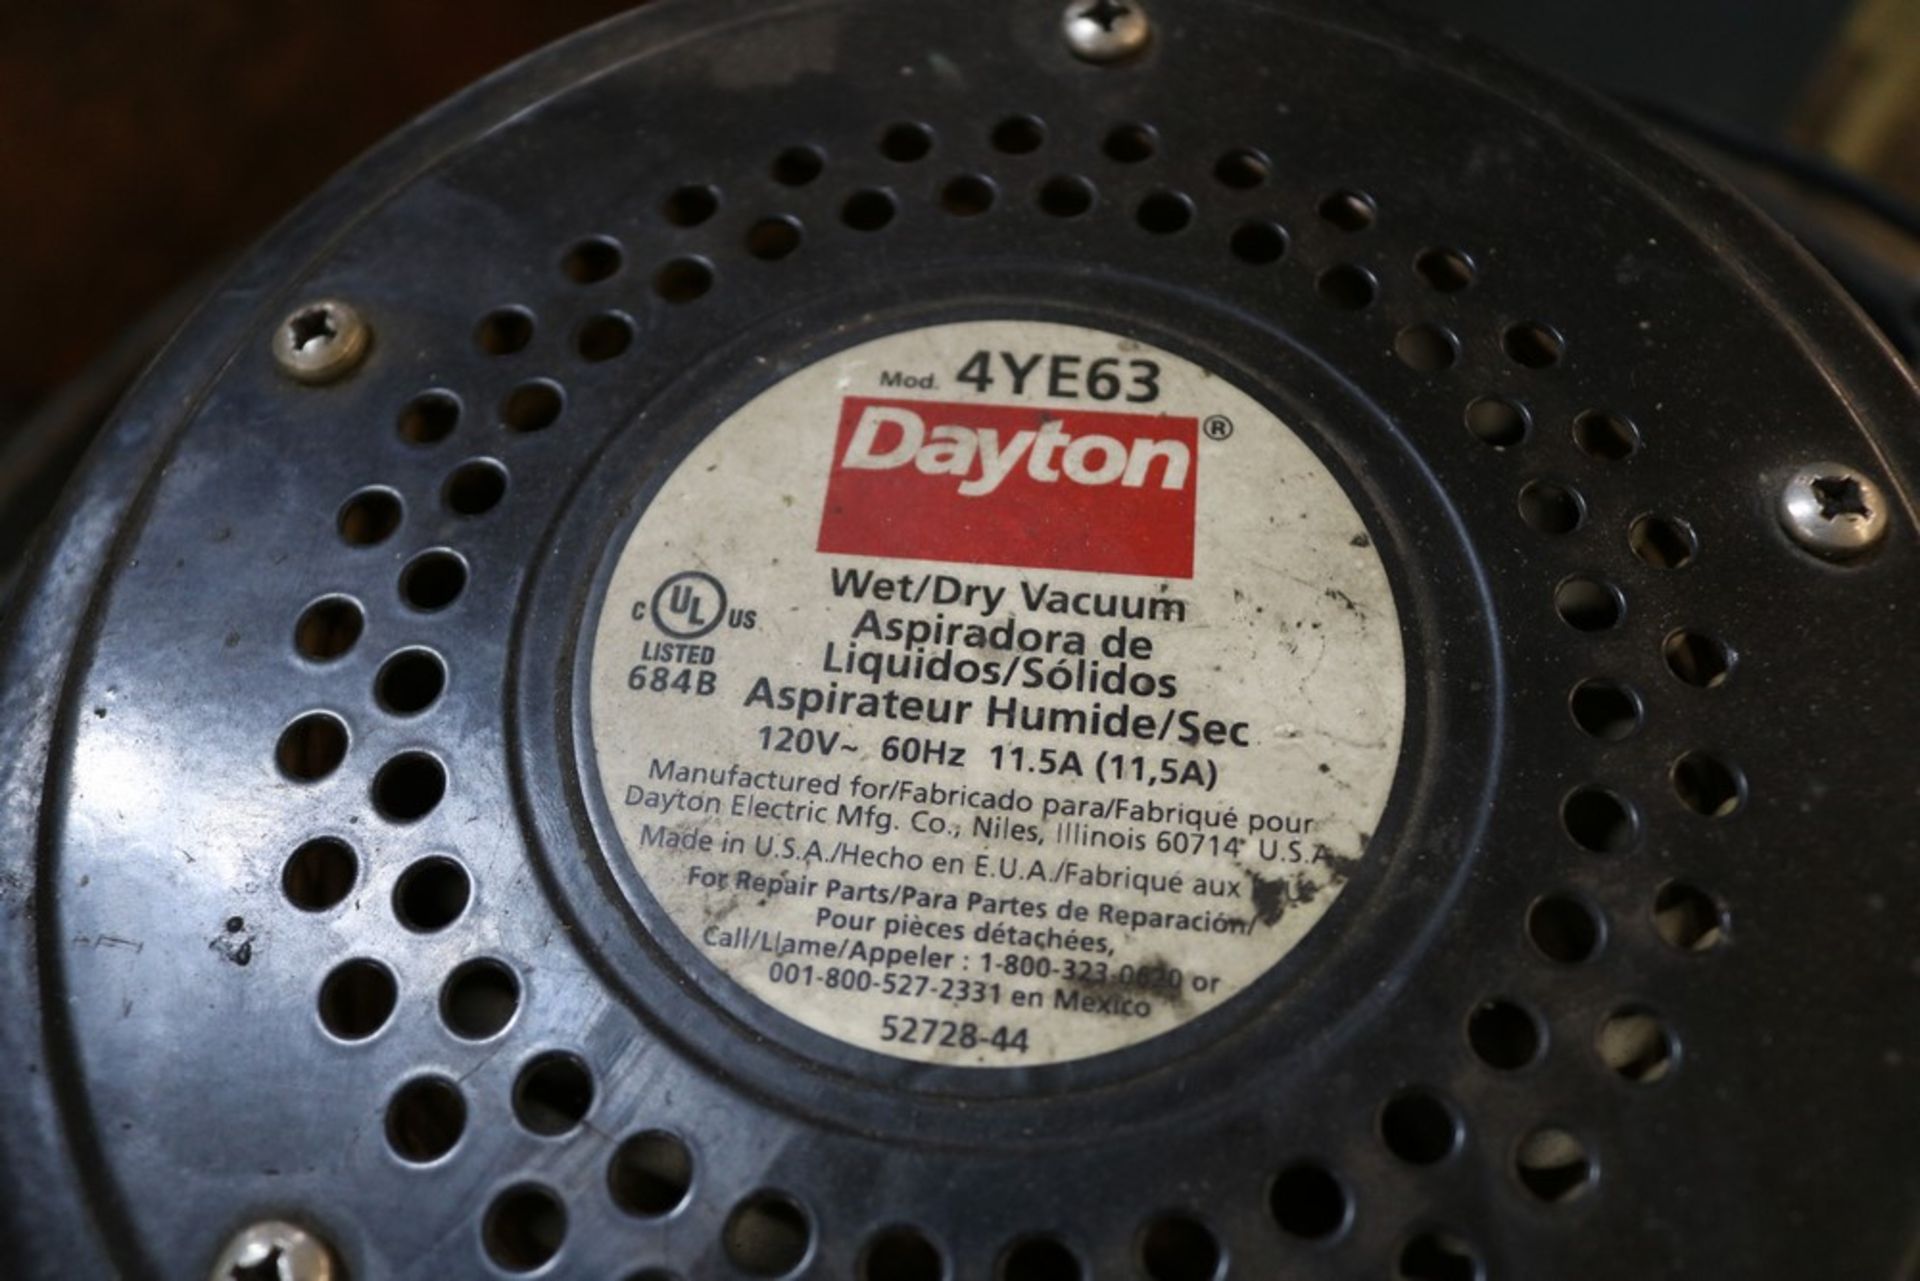 Dayton Portable Dry Vac Model 4YE63 - Image 3 of 4